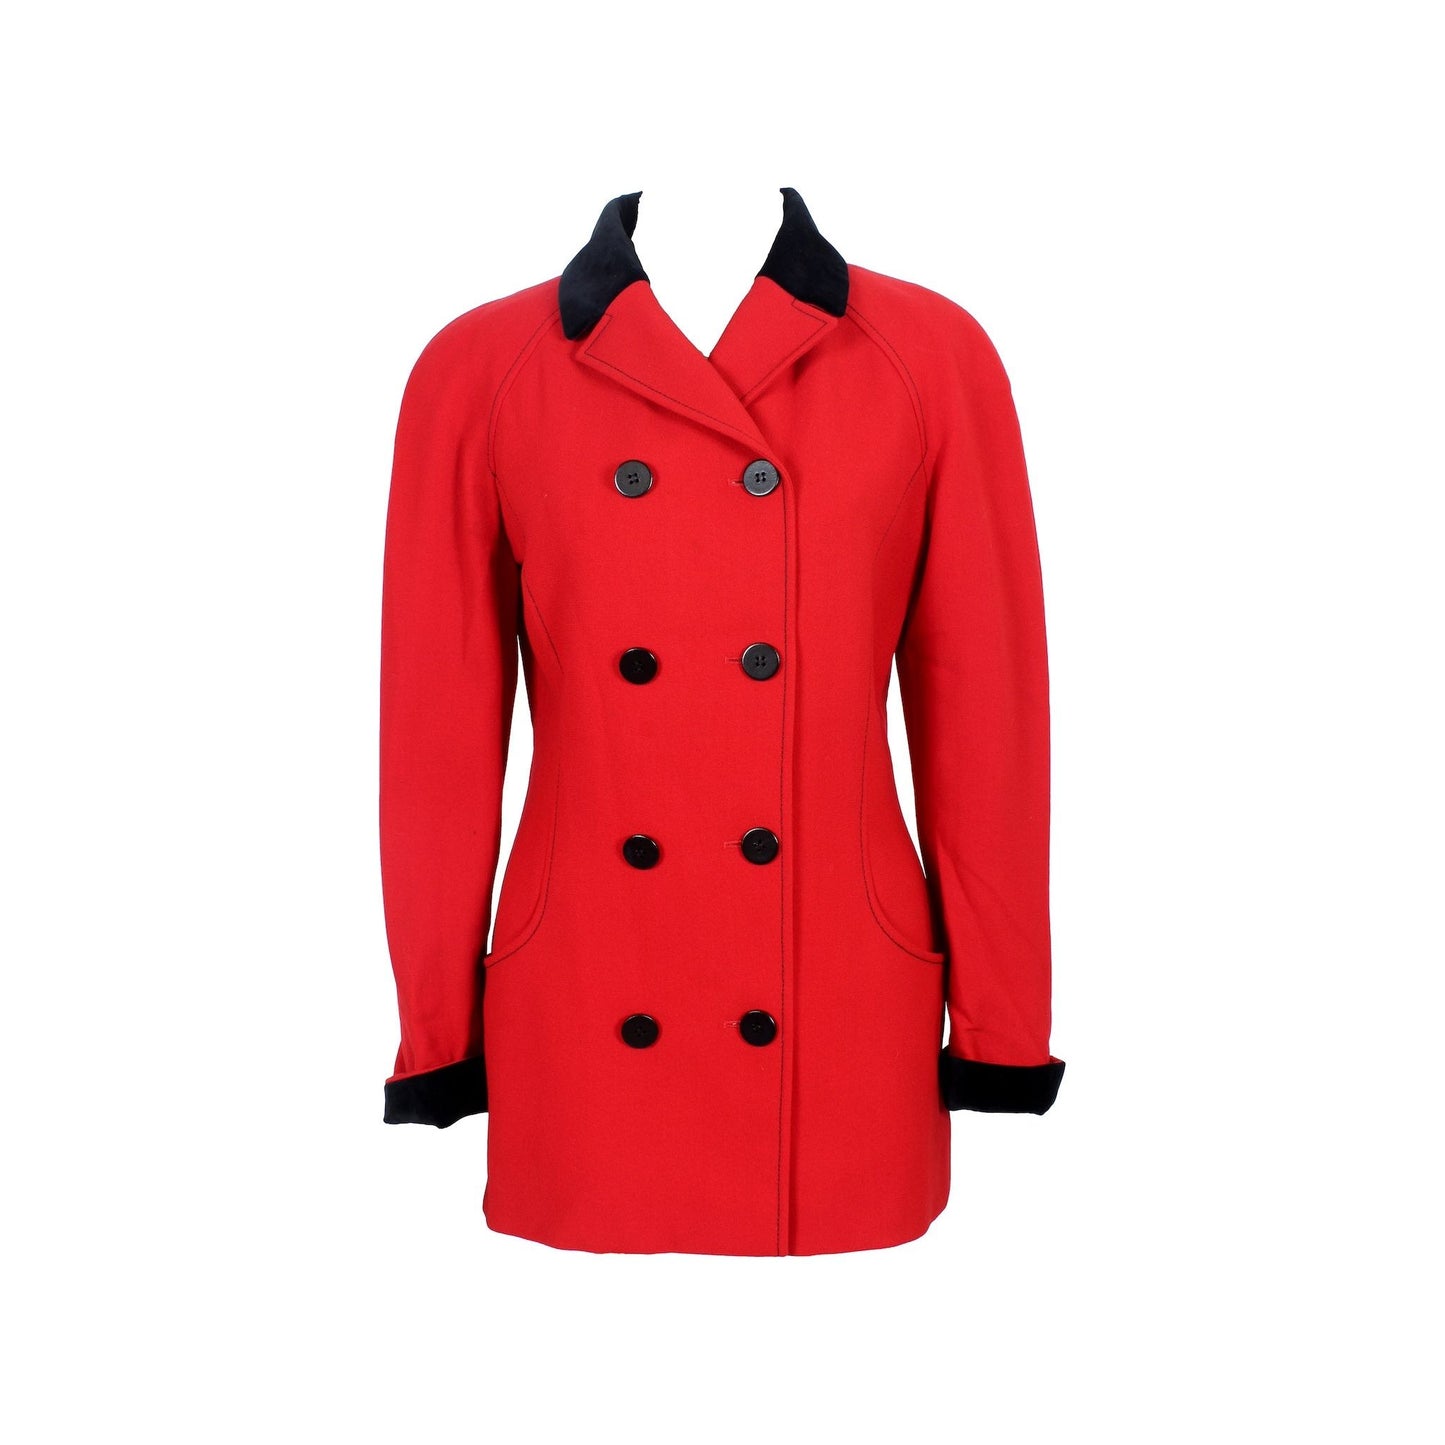 Genny wool red jacket